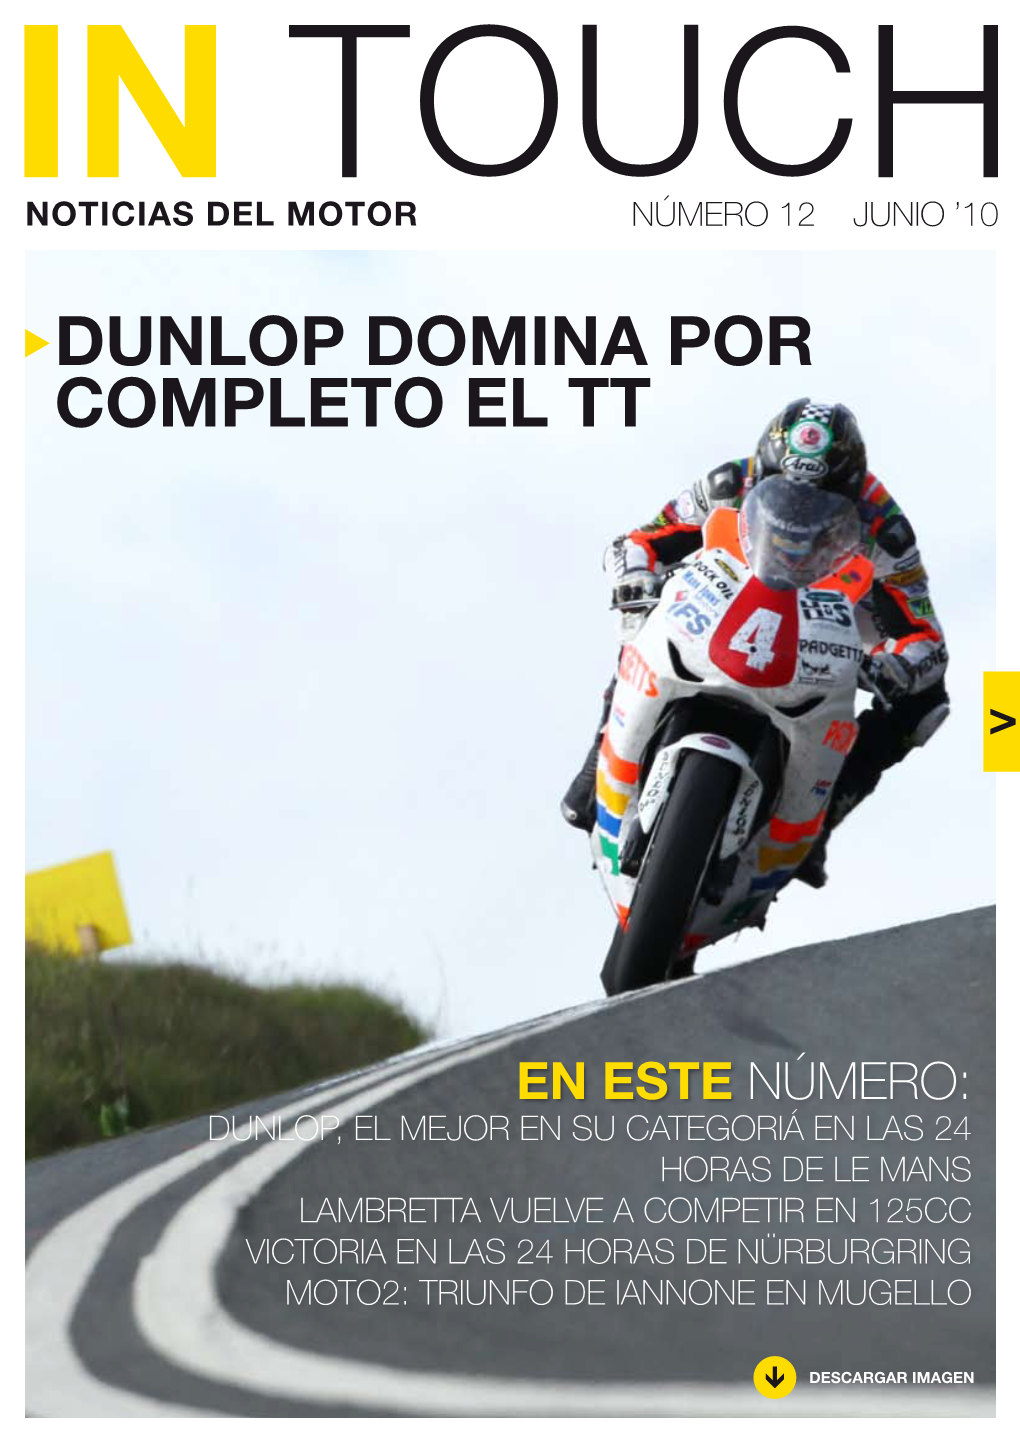 Dunlop Domina Por Completo El Tt